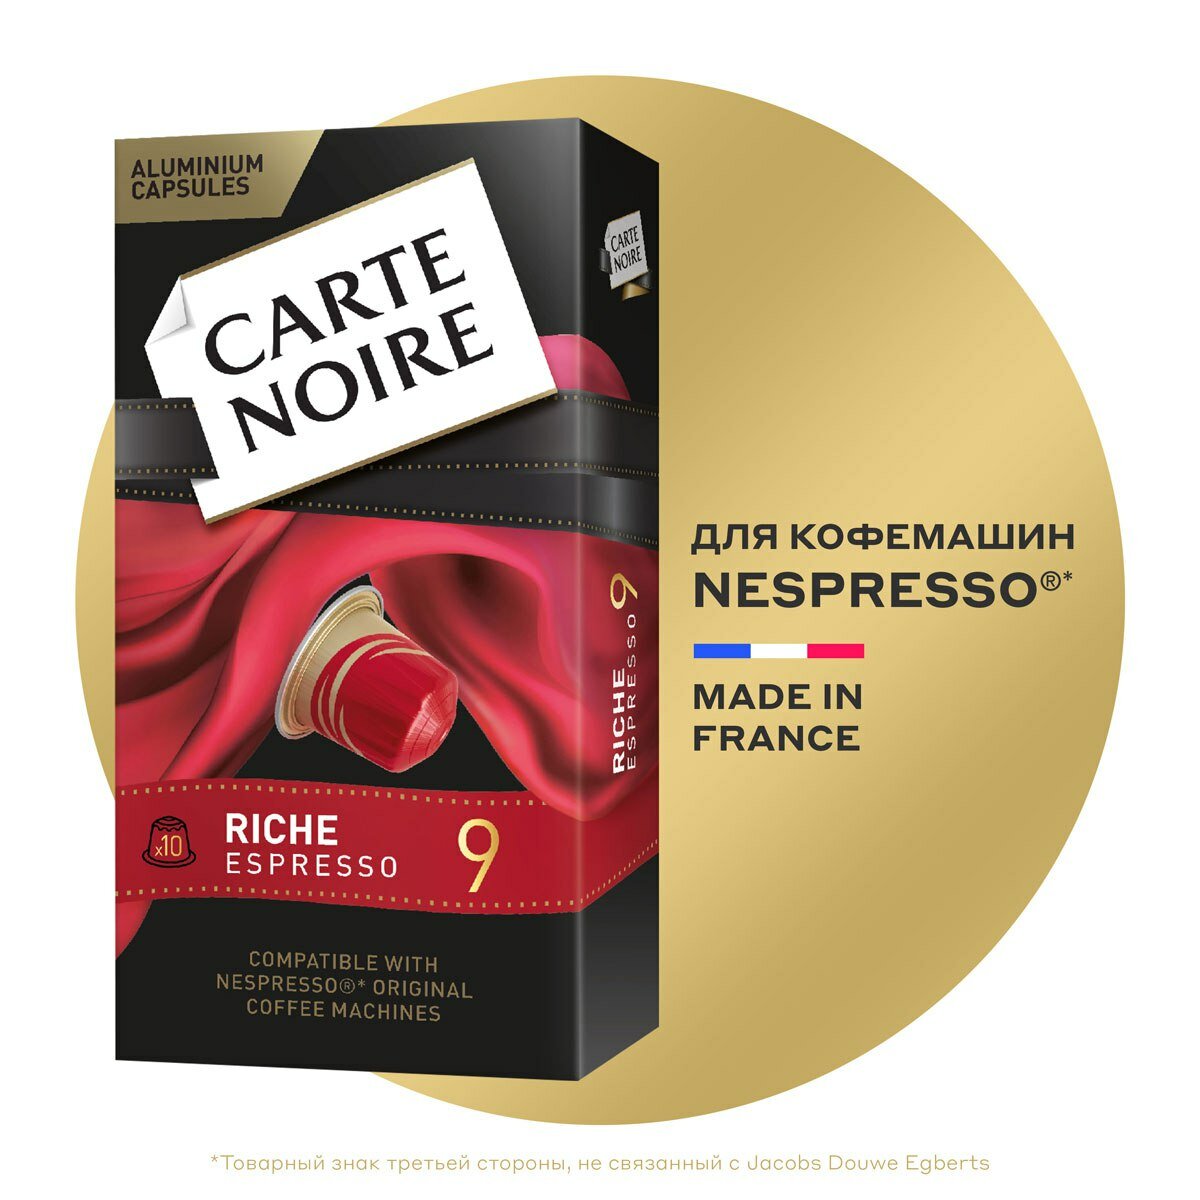 Кофе в капсулах Carte Noire Riche Espresso